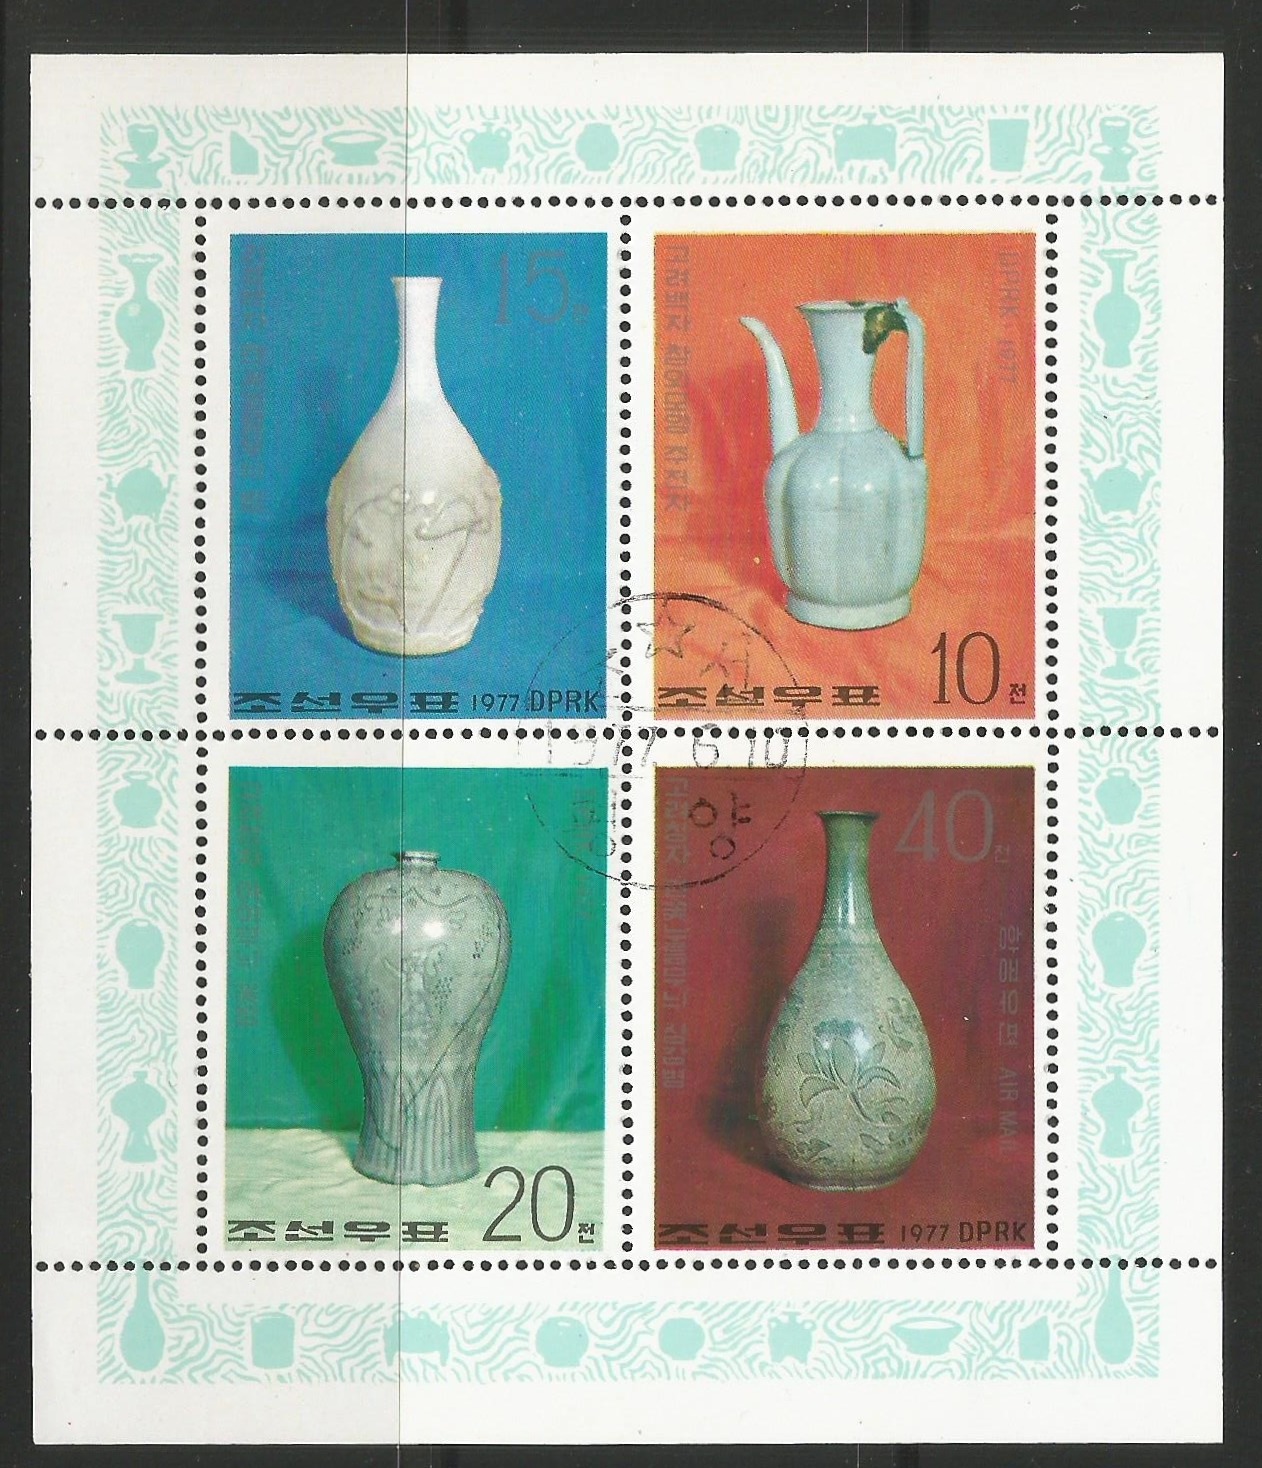 Mini Sheet, Porcelain Vases Korea, 1977 - $3.50